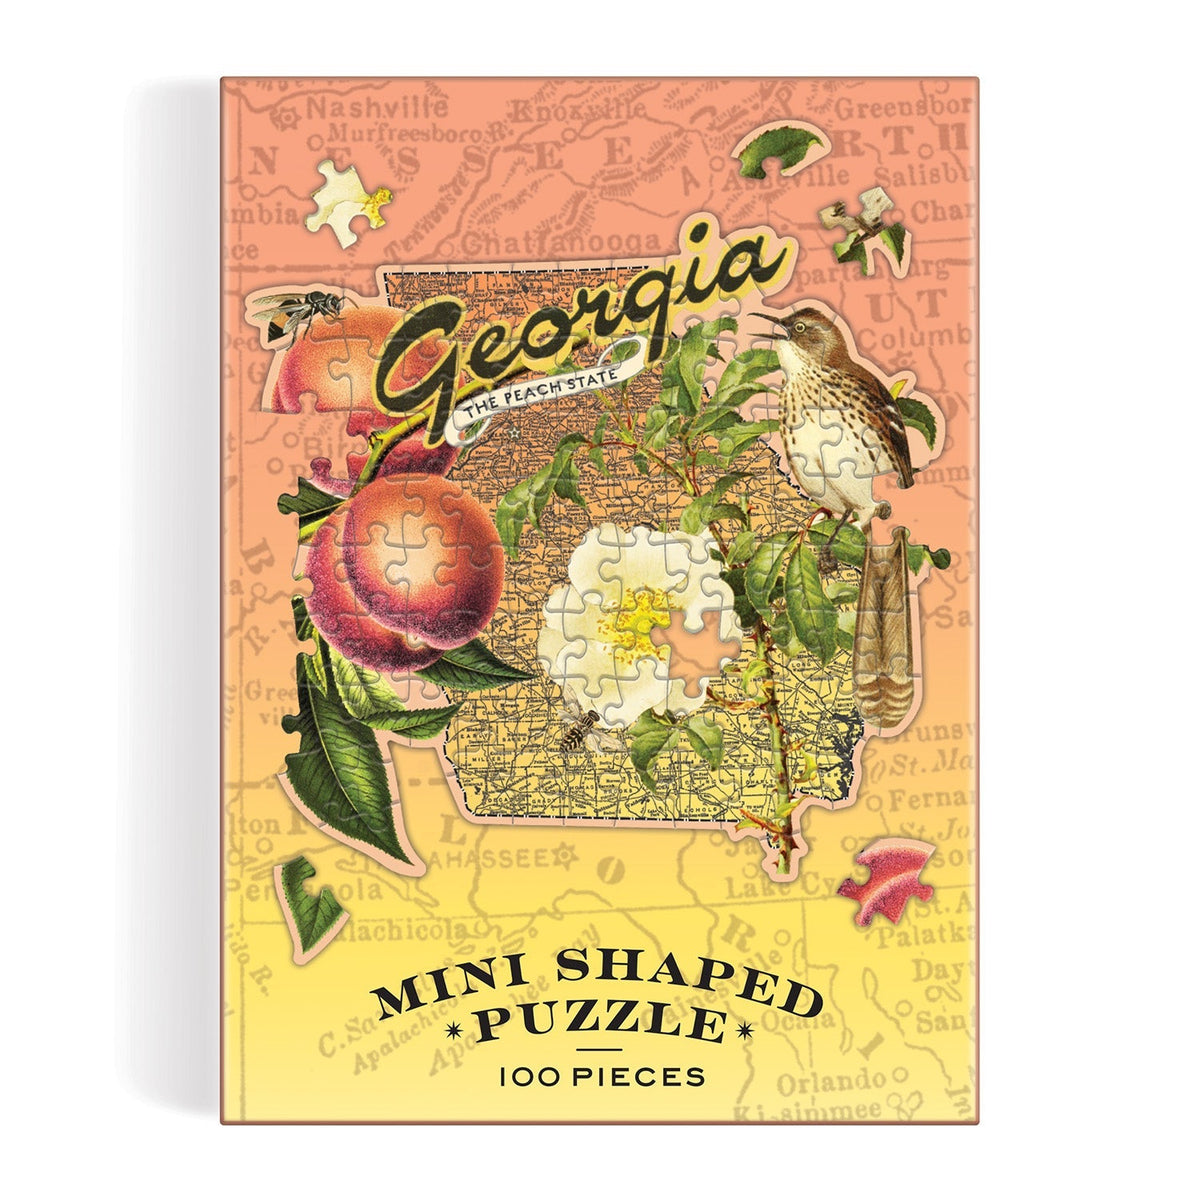 Wendy Gold&#39;s Georgia Mini Shaped 100 Piece Jigsaw Puzzle